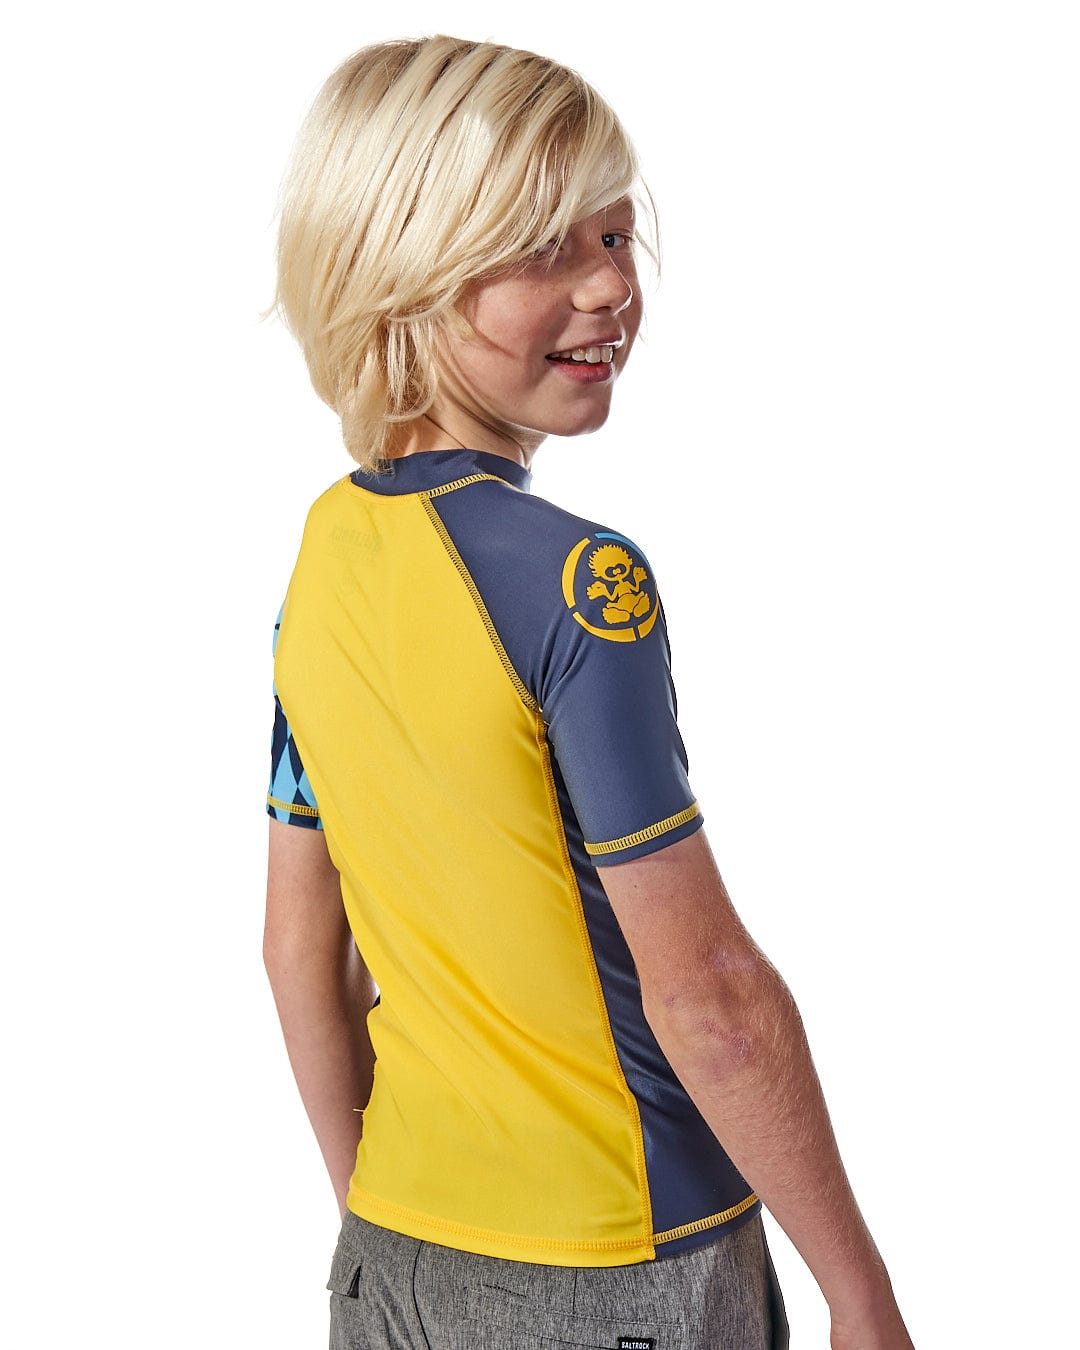 A young boy wearing a Saltrock Warp Kids Short Sleeve Rashvest - Yellow.